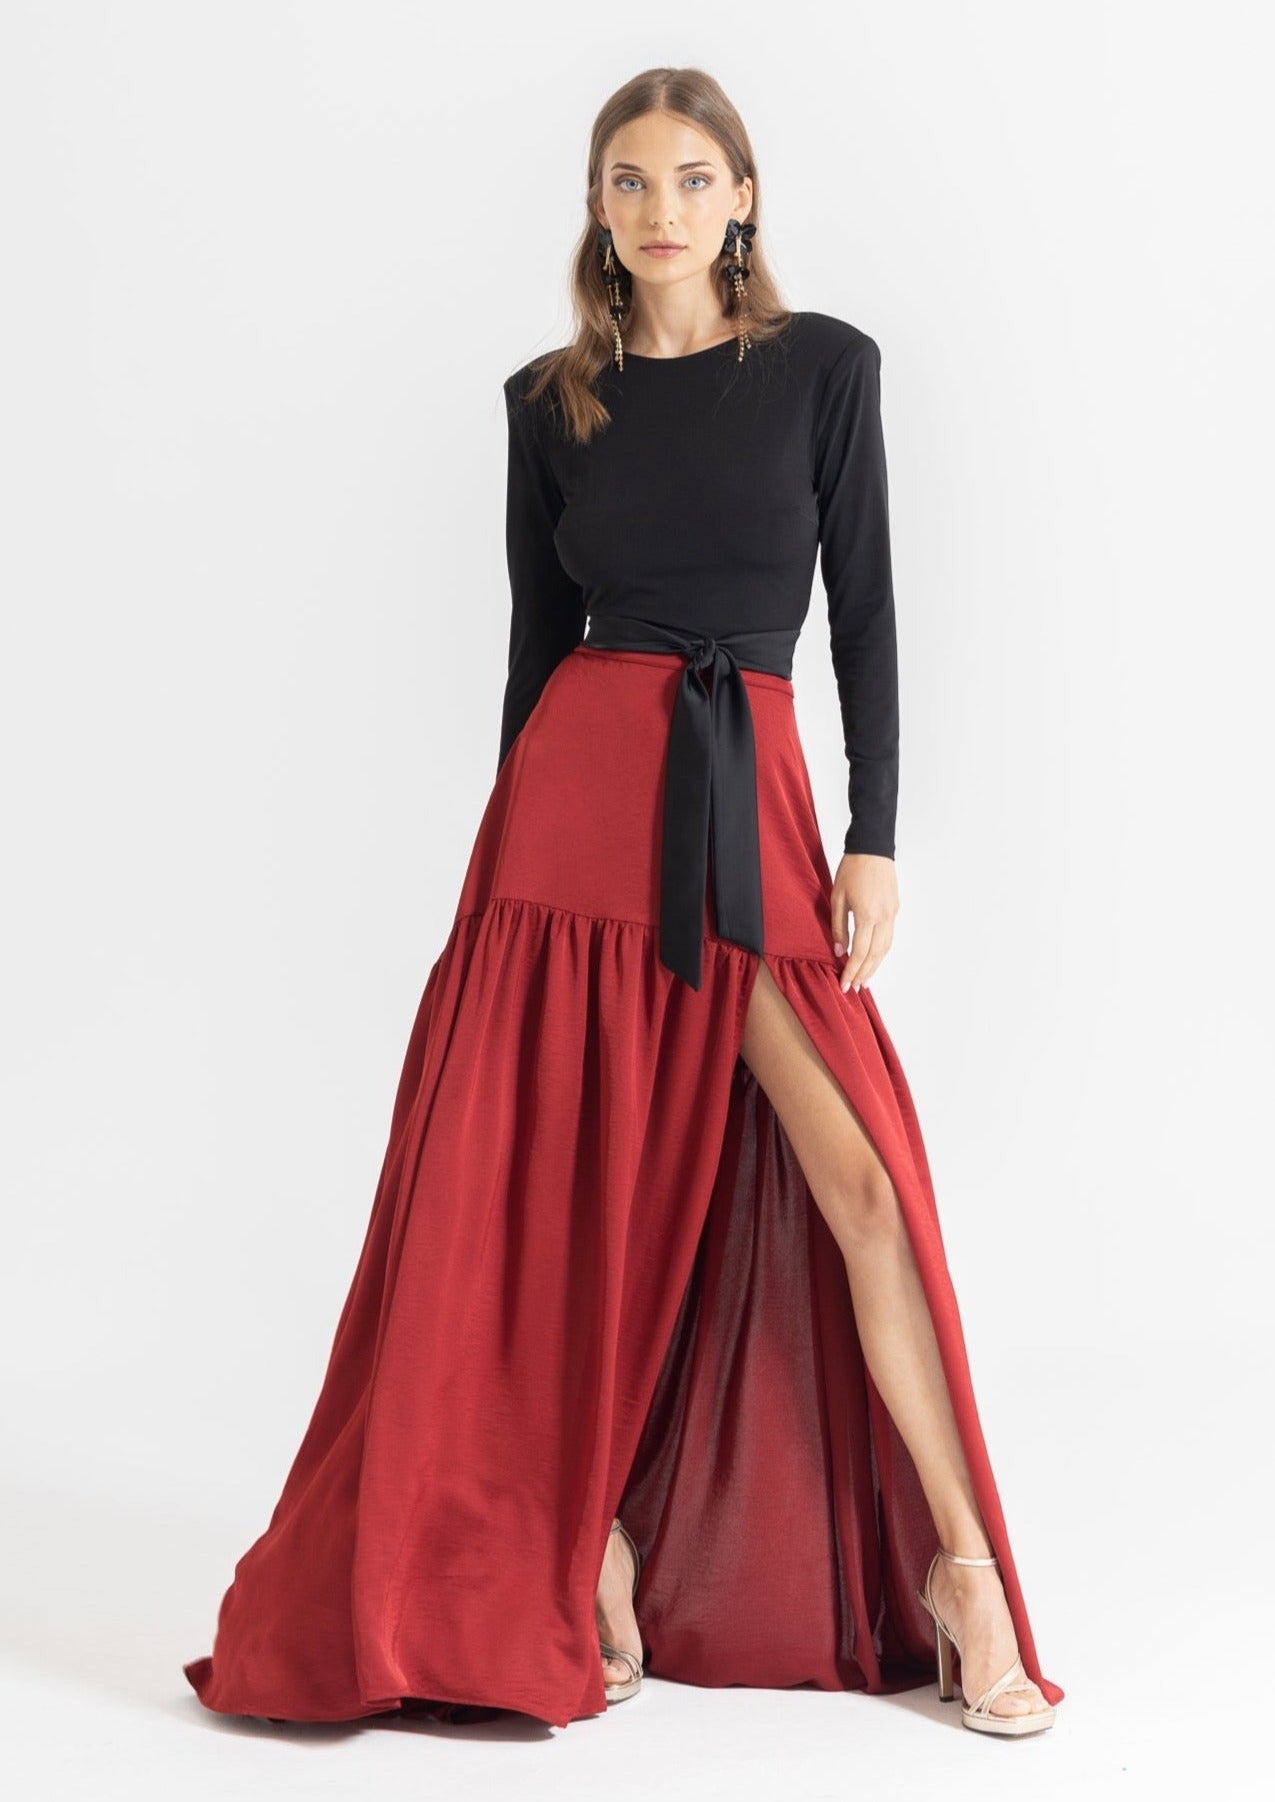 Red Valentina skirt